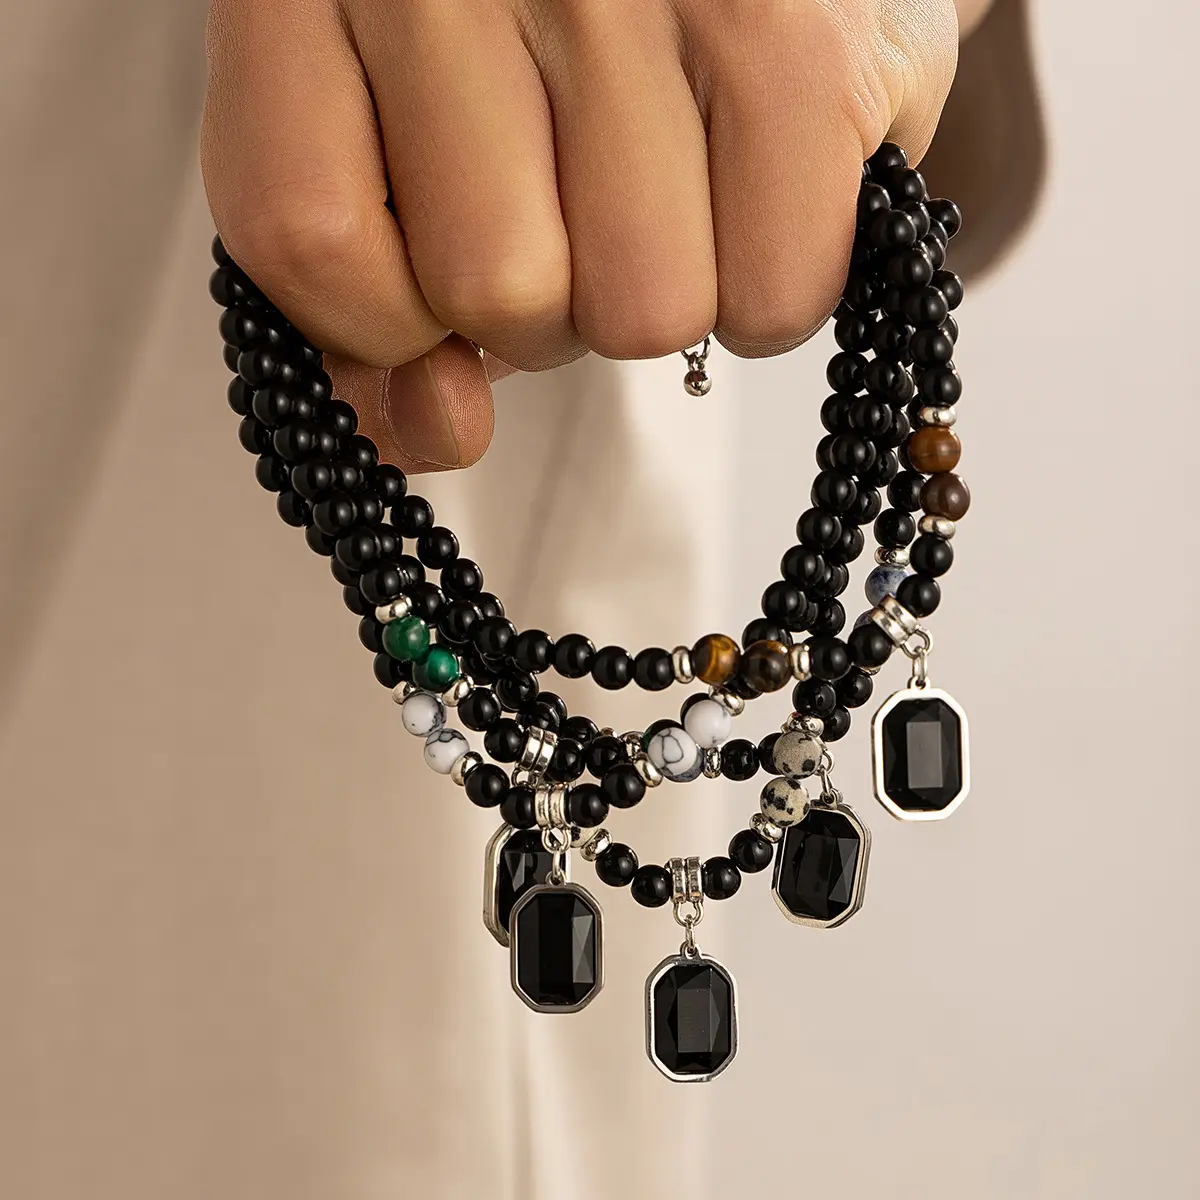 Collar de colgante cuadrado con cuentas negras collar de accesorios de moda para hombres collar de joyas de moda regalo para